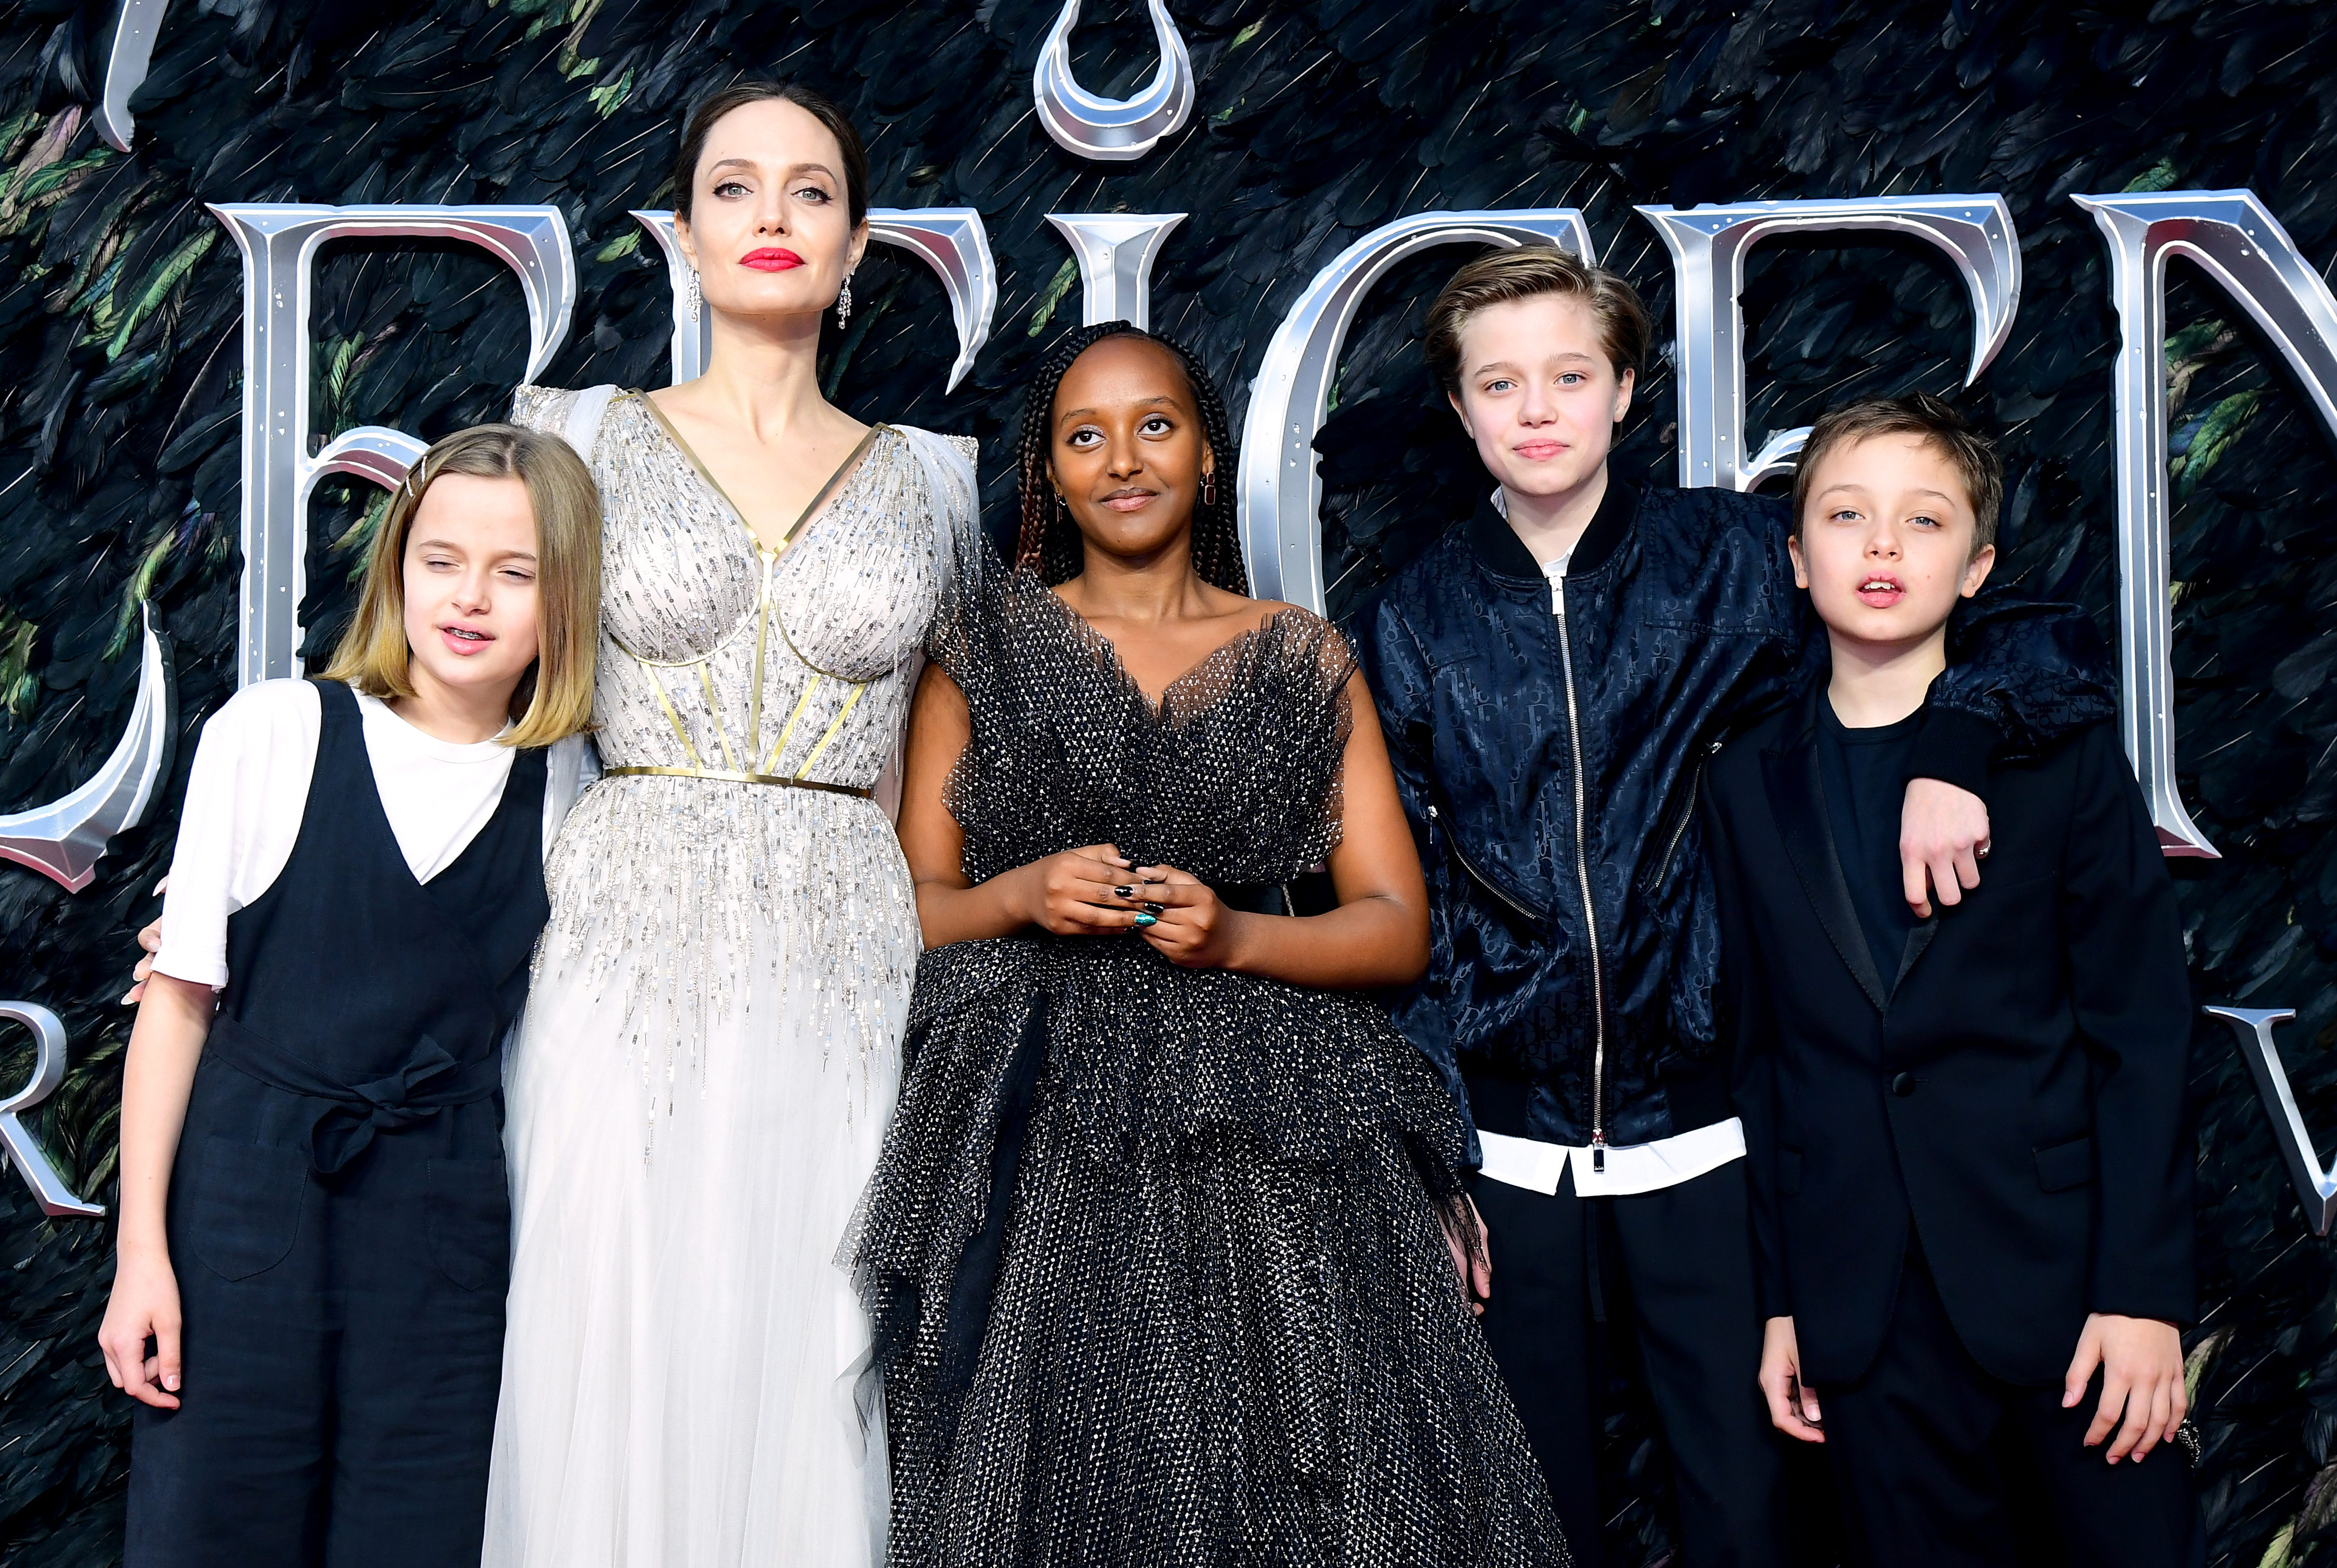 Vivienne Jolie-Pitt, Zahara Jolie-Pitt, Shiloh Jolie-Pitt, and Knox Jolie-Pitt during the Maleficent: Mistress of Evil European Premiere held at Imax Waterloo in London on October 9, 2019 | Source: Getty Images